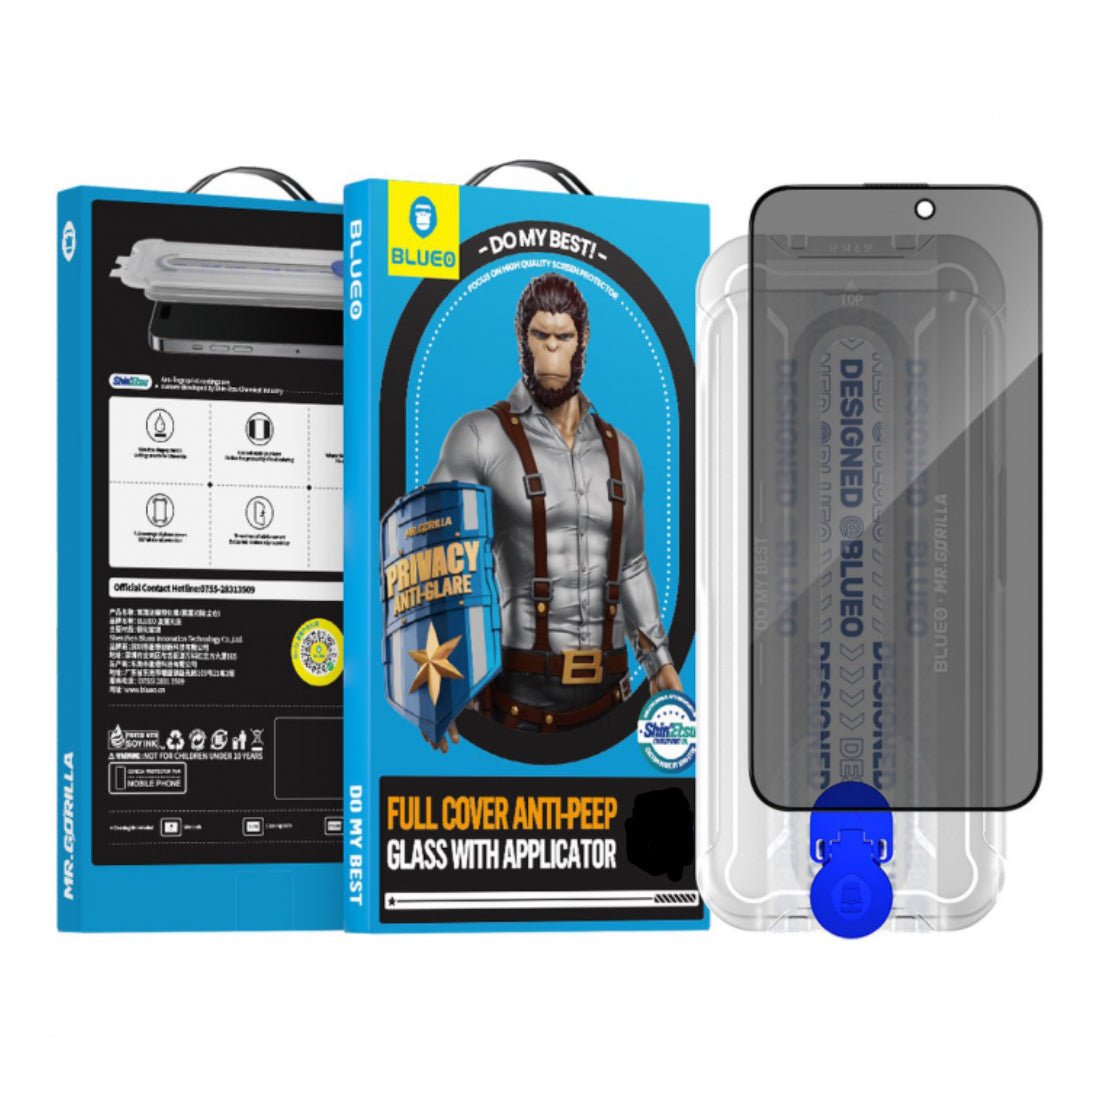 Blueo Full Cover Anti-Peep Glass with applicator - iPhone15 Pro Max 6.7 - أكسسوار - Store 974 | ستور ٩٧٤